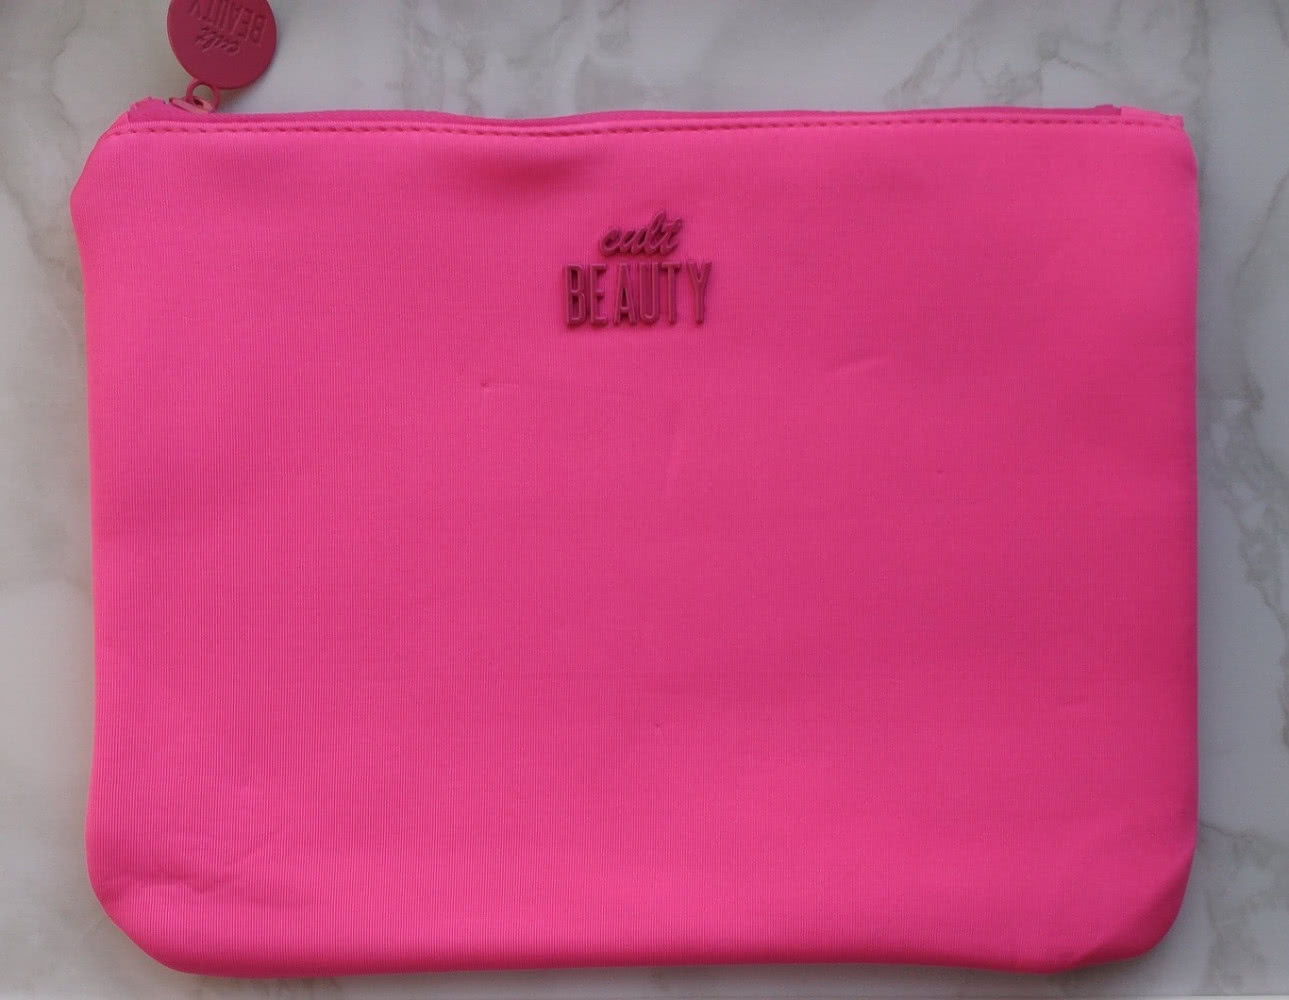 Cult Beauty Pink Neoprene Bag косметичка